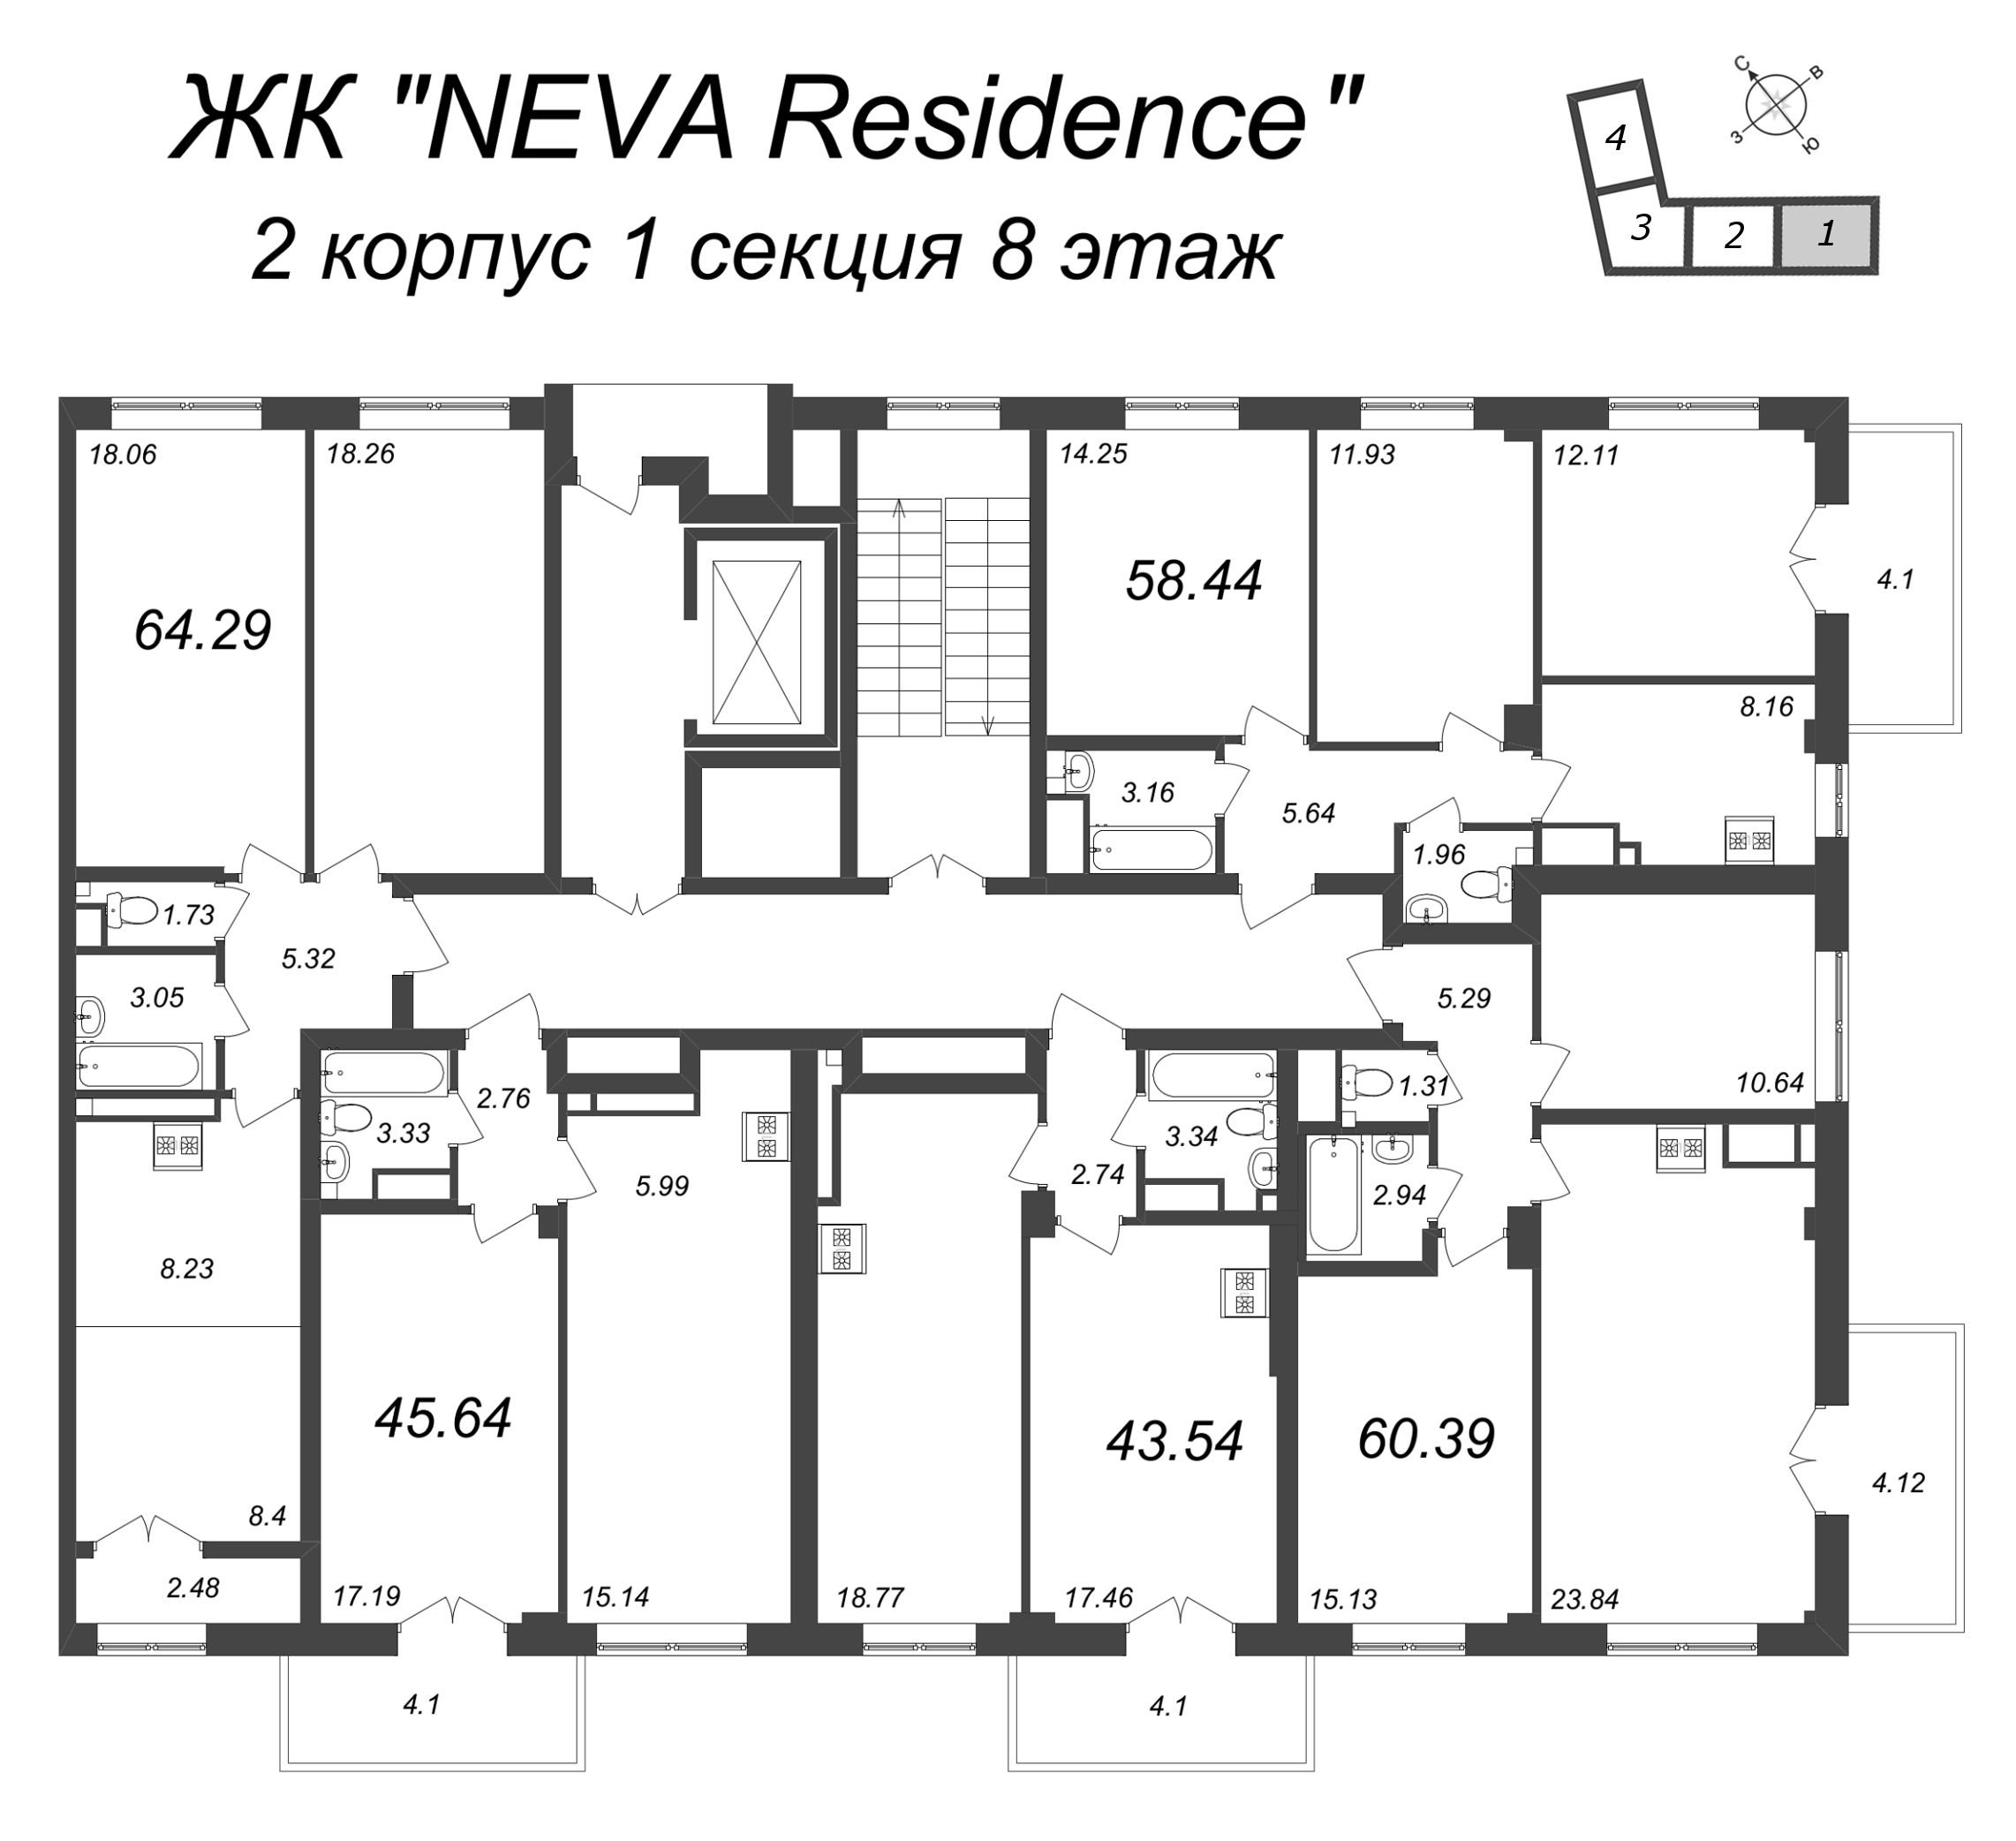 3-комнатная (Евро) квартира, 64.29 м² - планировка этажа